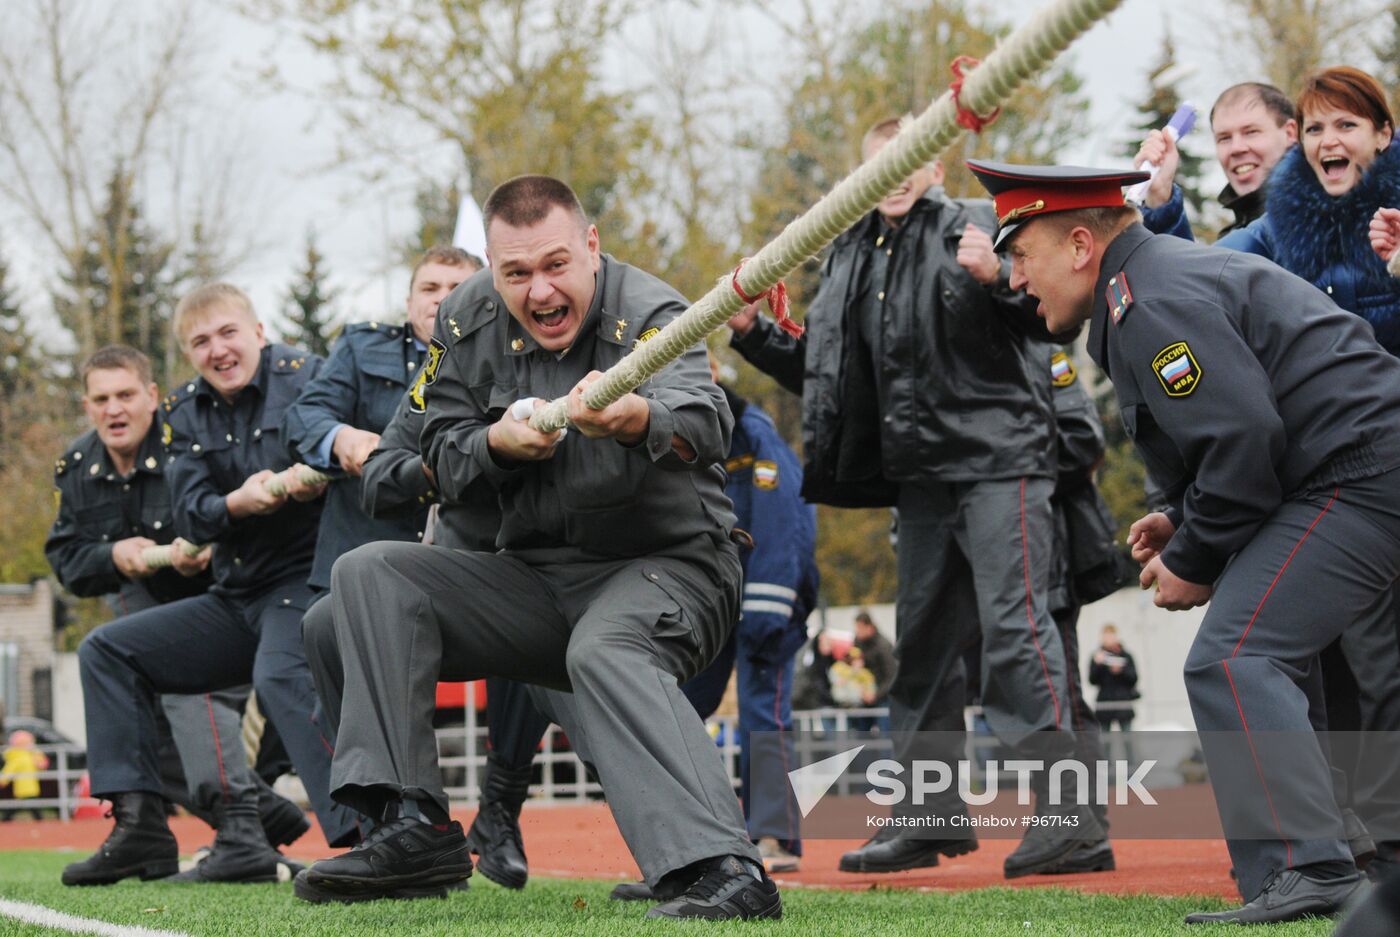 Sports festival staged in Veliky Novgorod